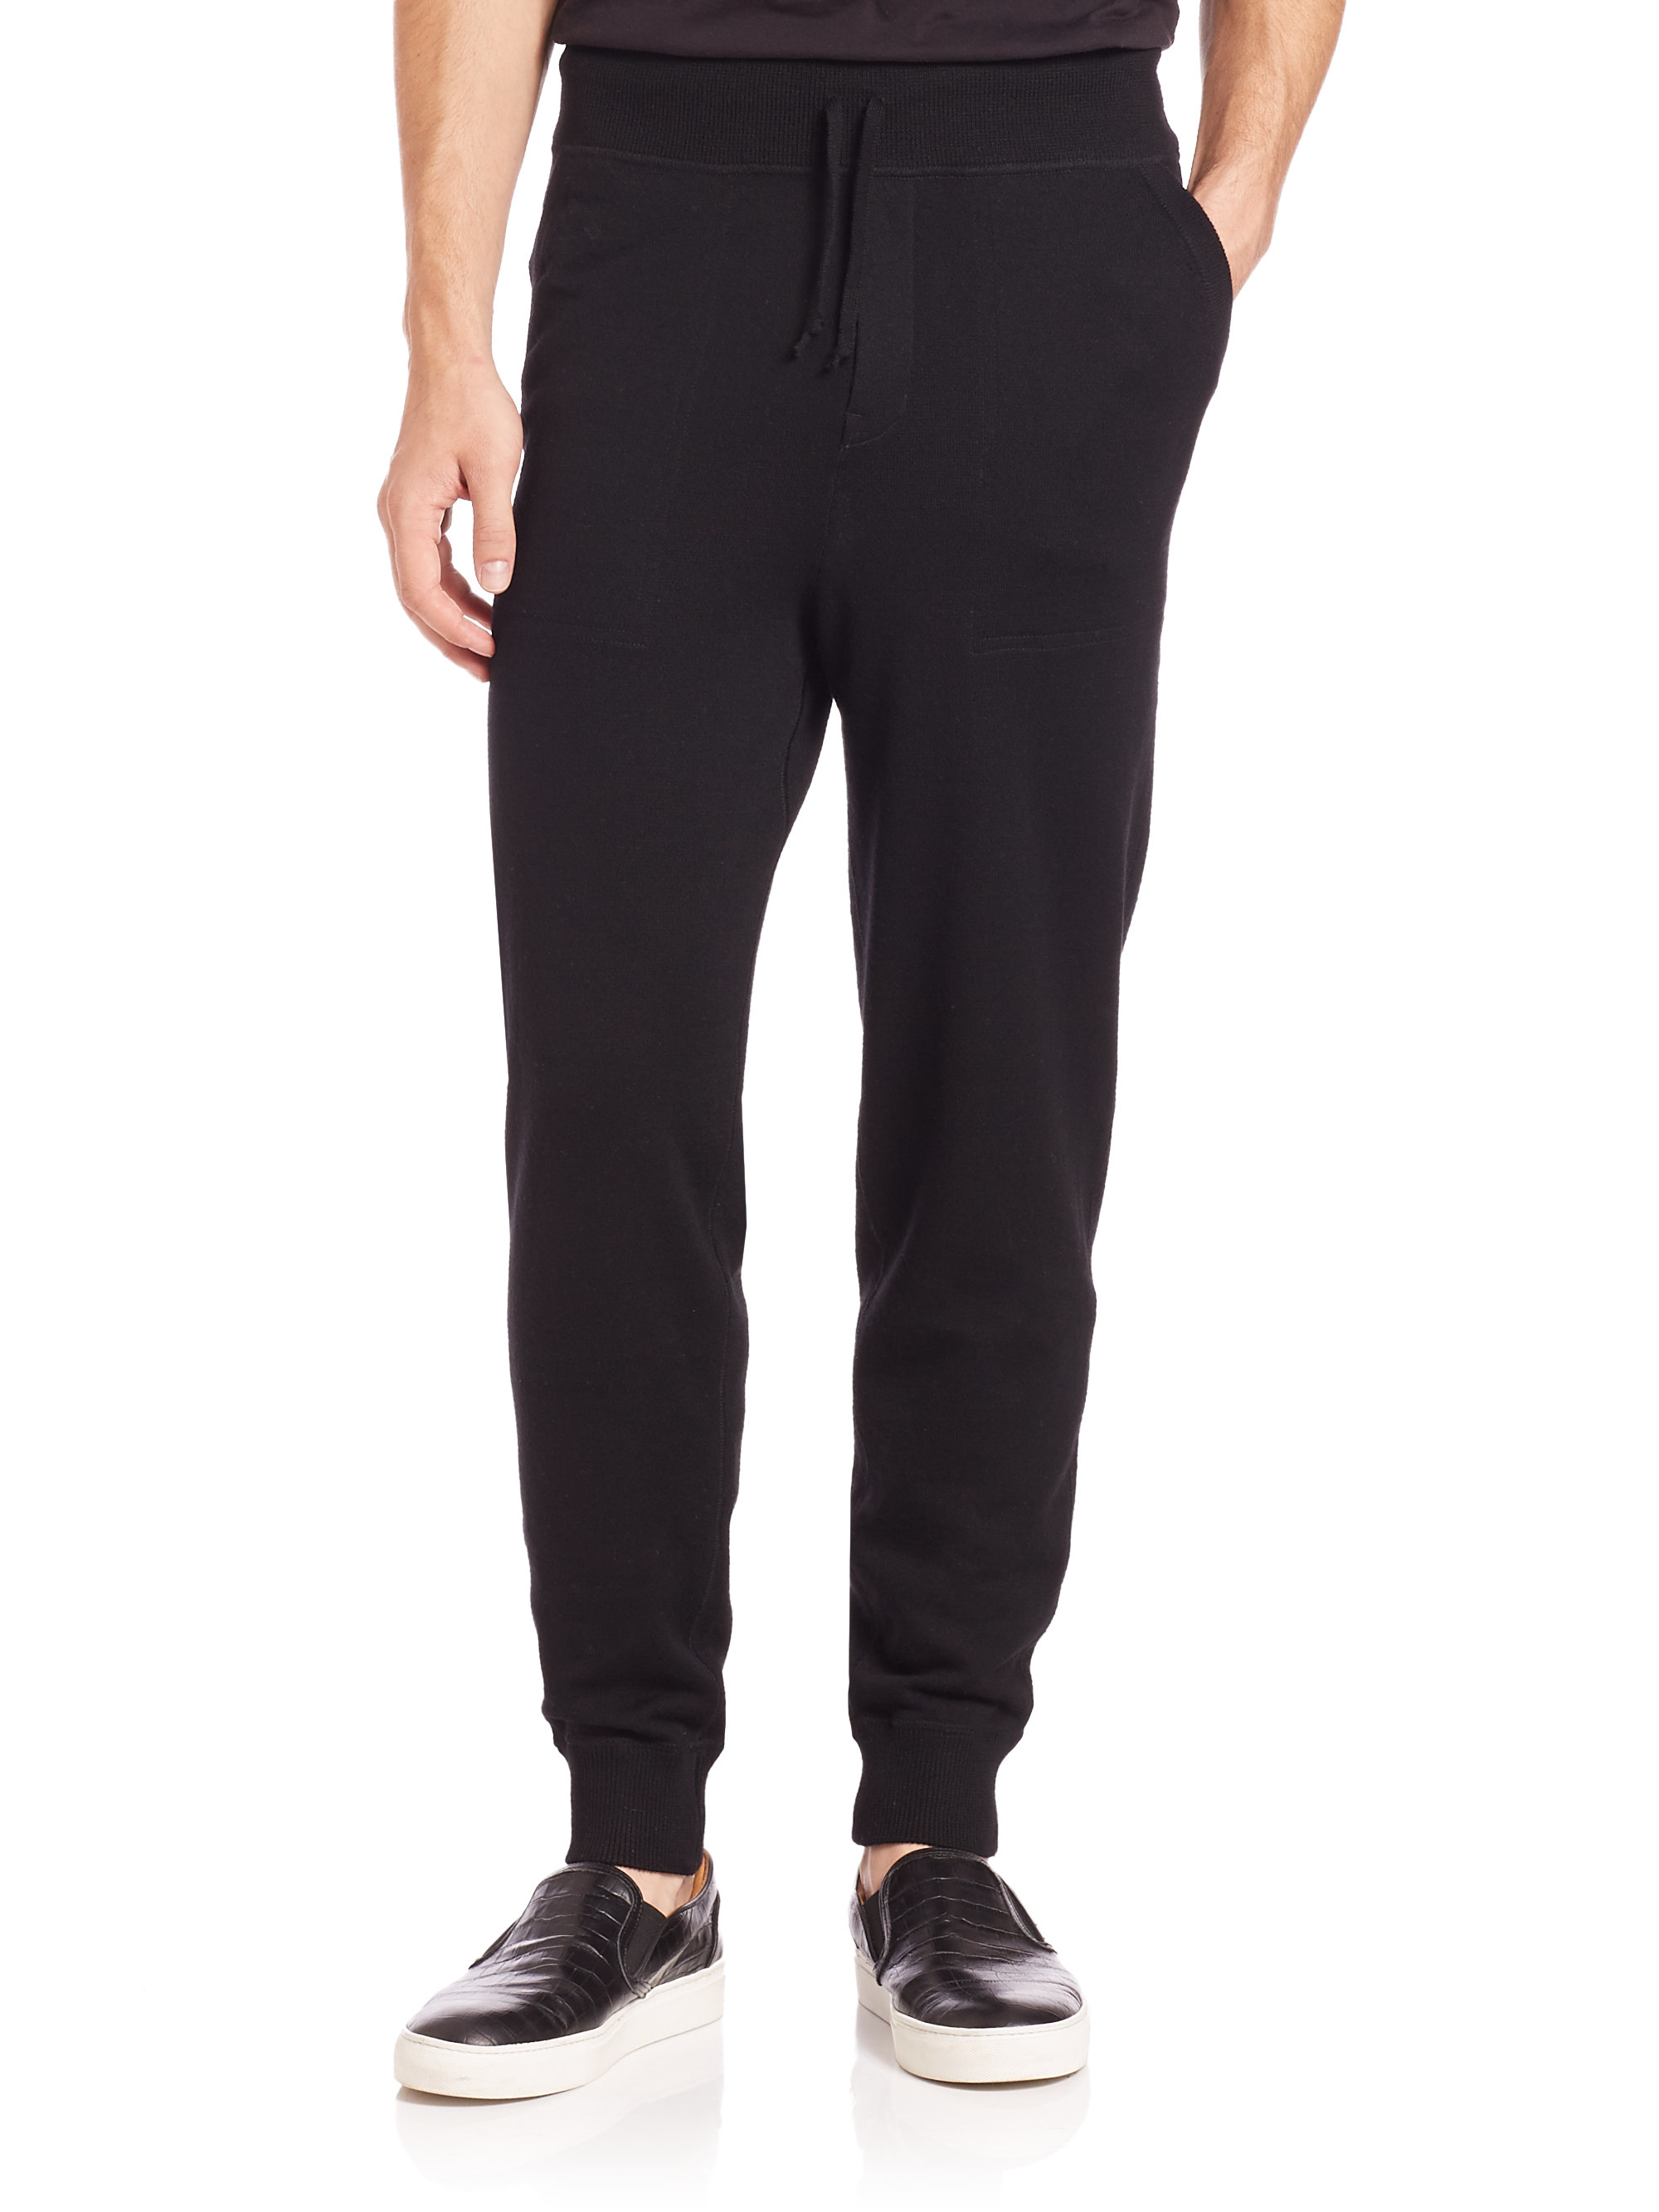 Lyst - Polo Ralph Lauren Merino Wool Lounge Pants in Black for Men